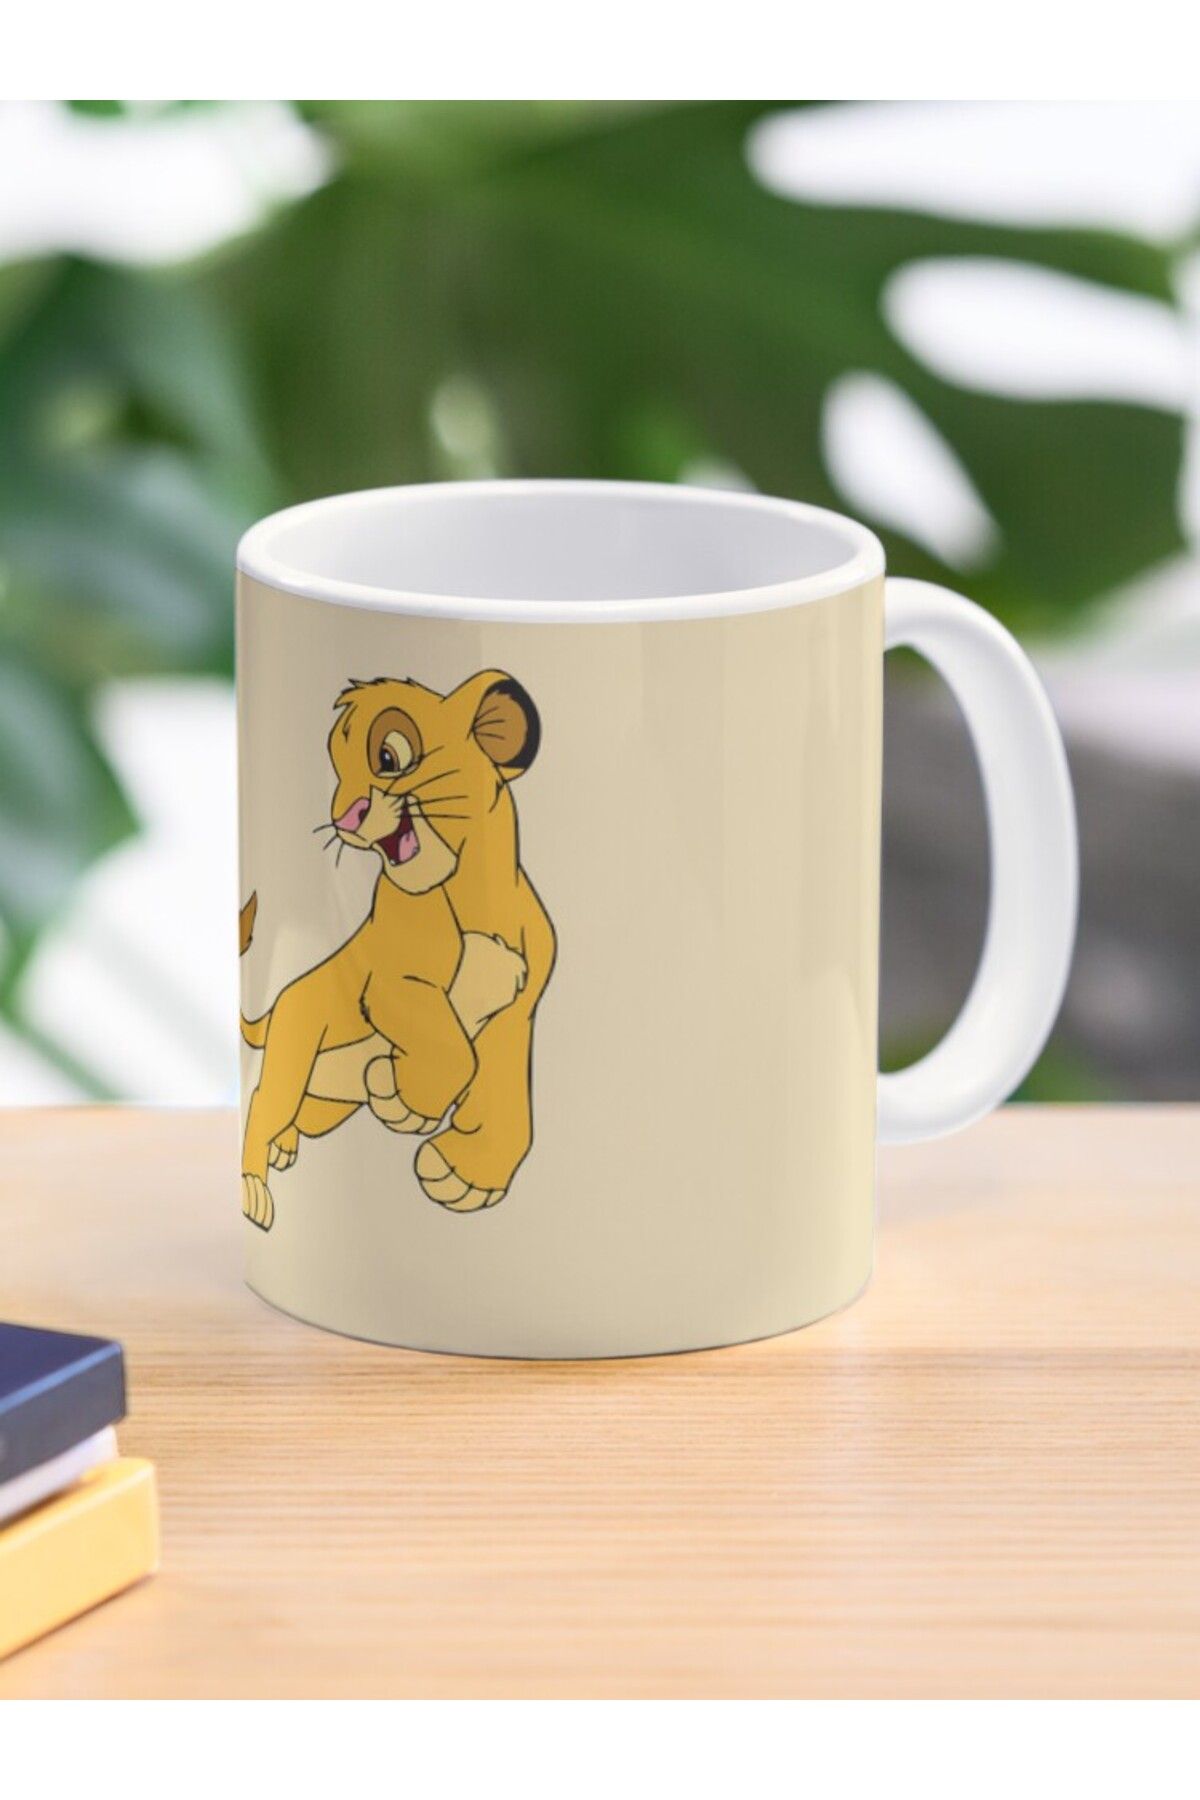 w house Baskılı Kupa Bardak 006561 - Simba and Nala - Cartoon Animals Coffee Mug